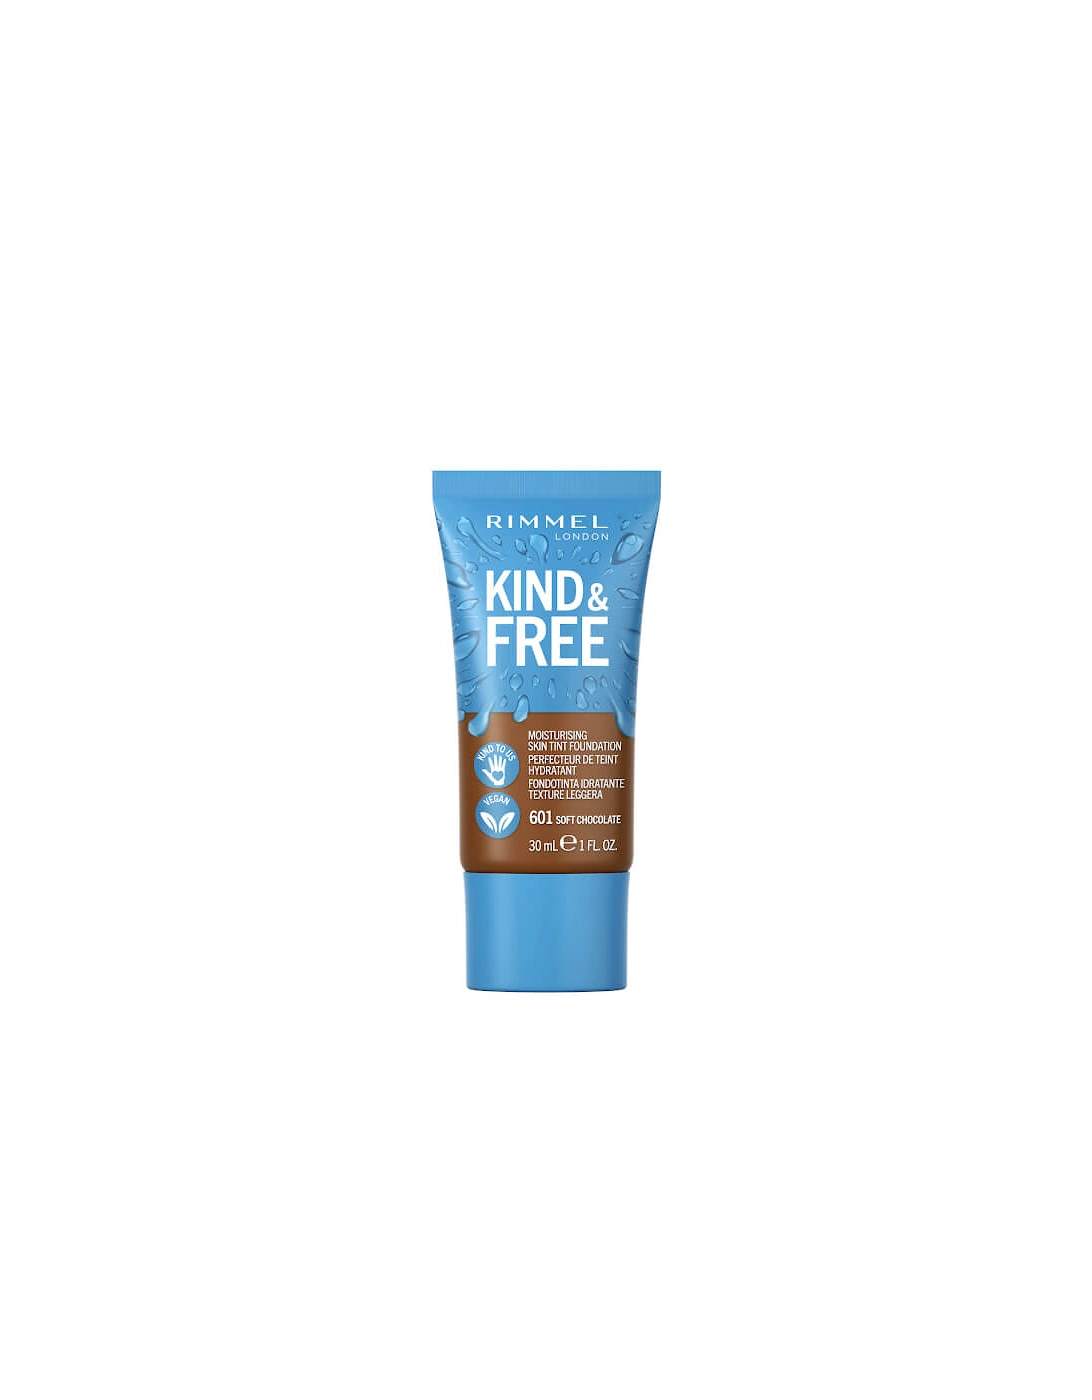 Kind and Free Skin Tint Moisturising Foundation - Soft Chocolate, 2 of 1